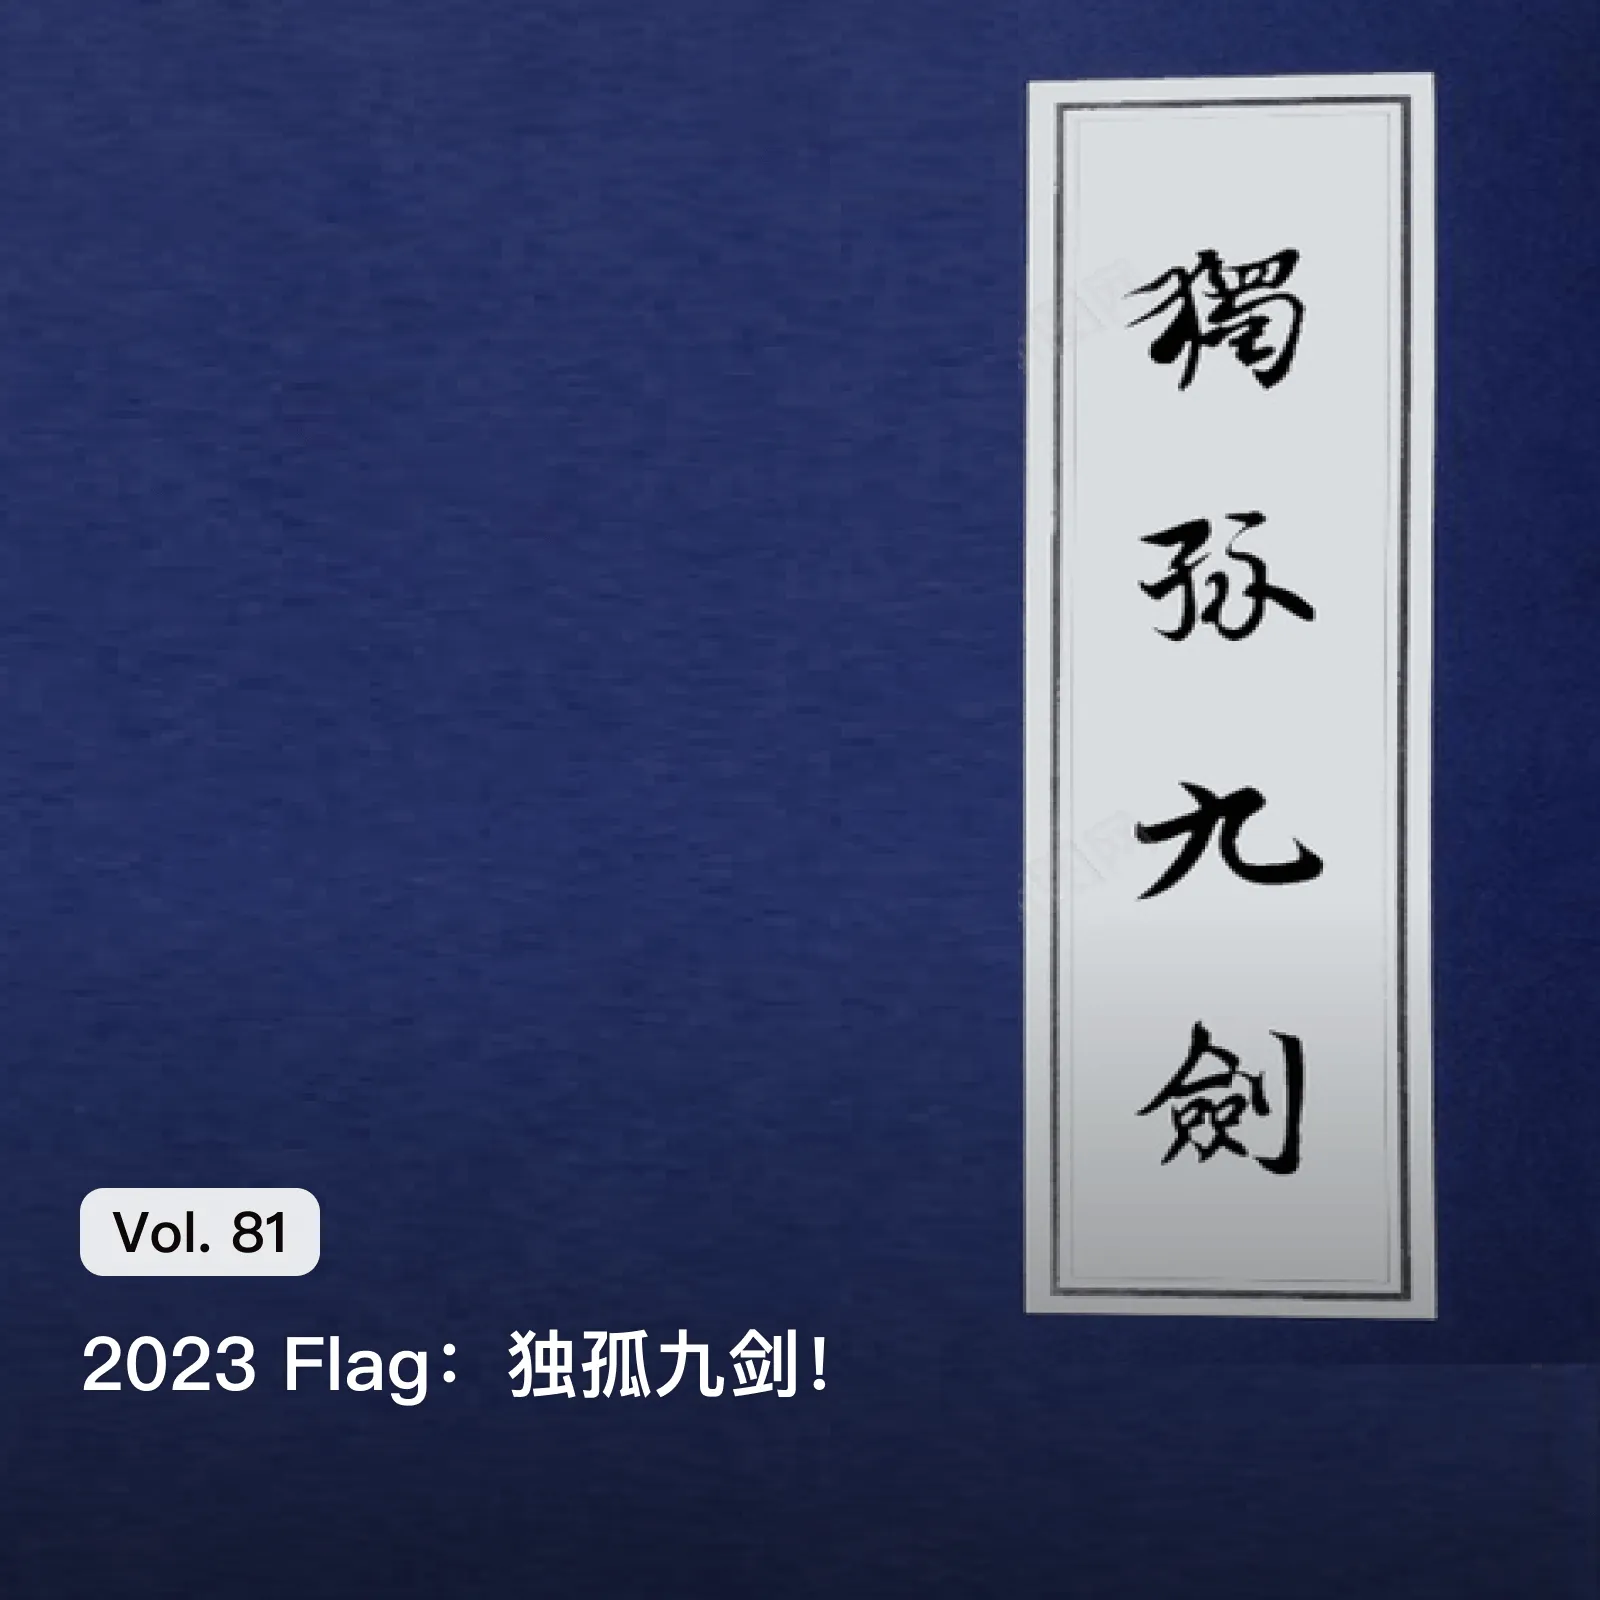 Vol. 81 2023 Flag: 独孤九剑!